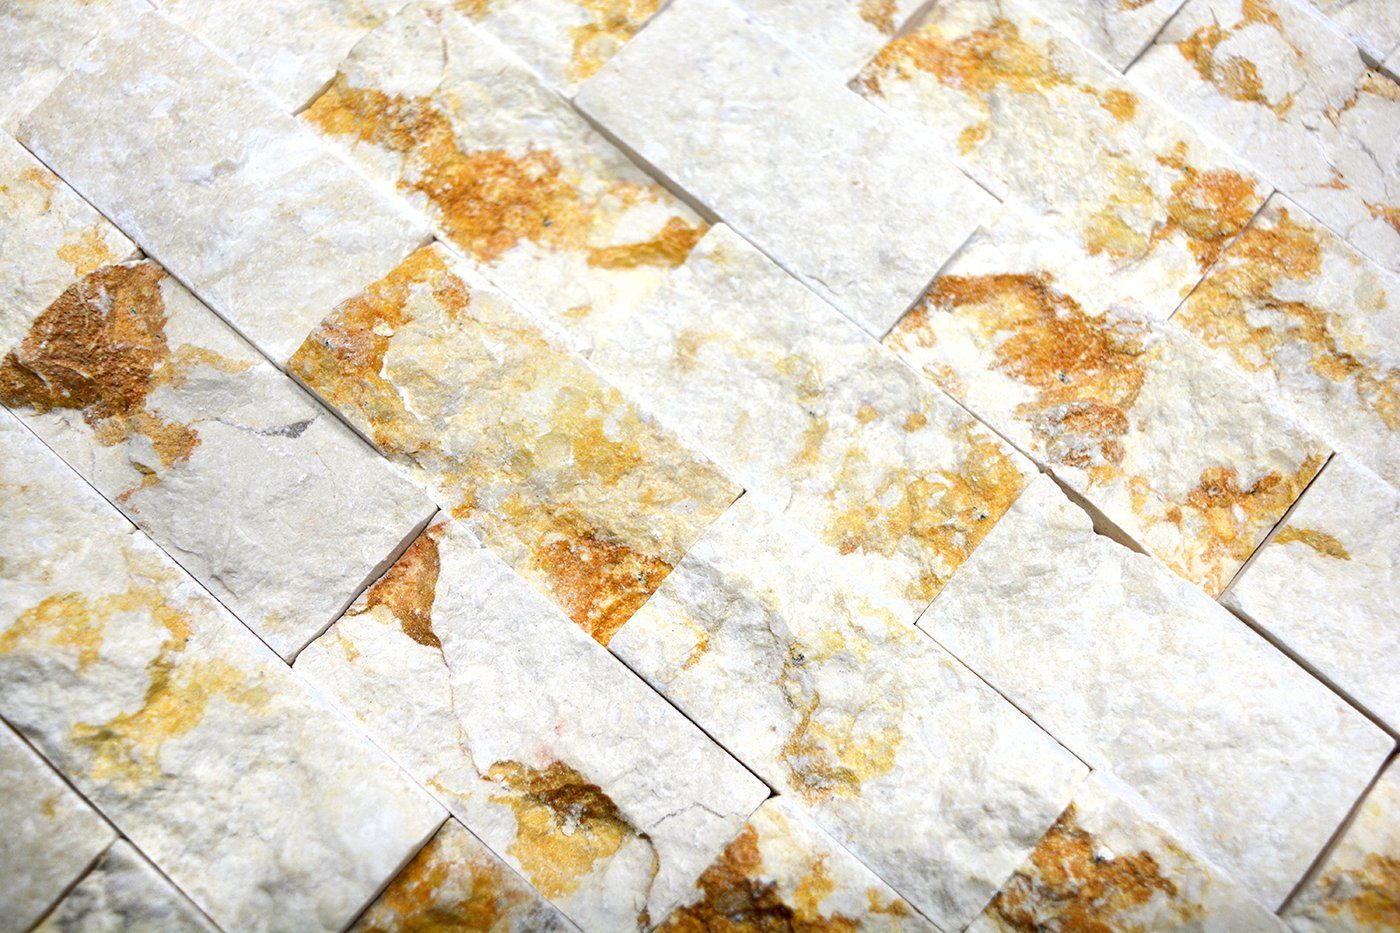 Steinwand Mosaik Mosaikfliesen Brick Mauerverband Mosani Naturstein Splitface Marmor